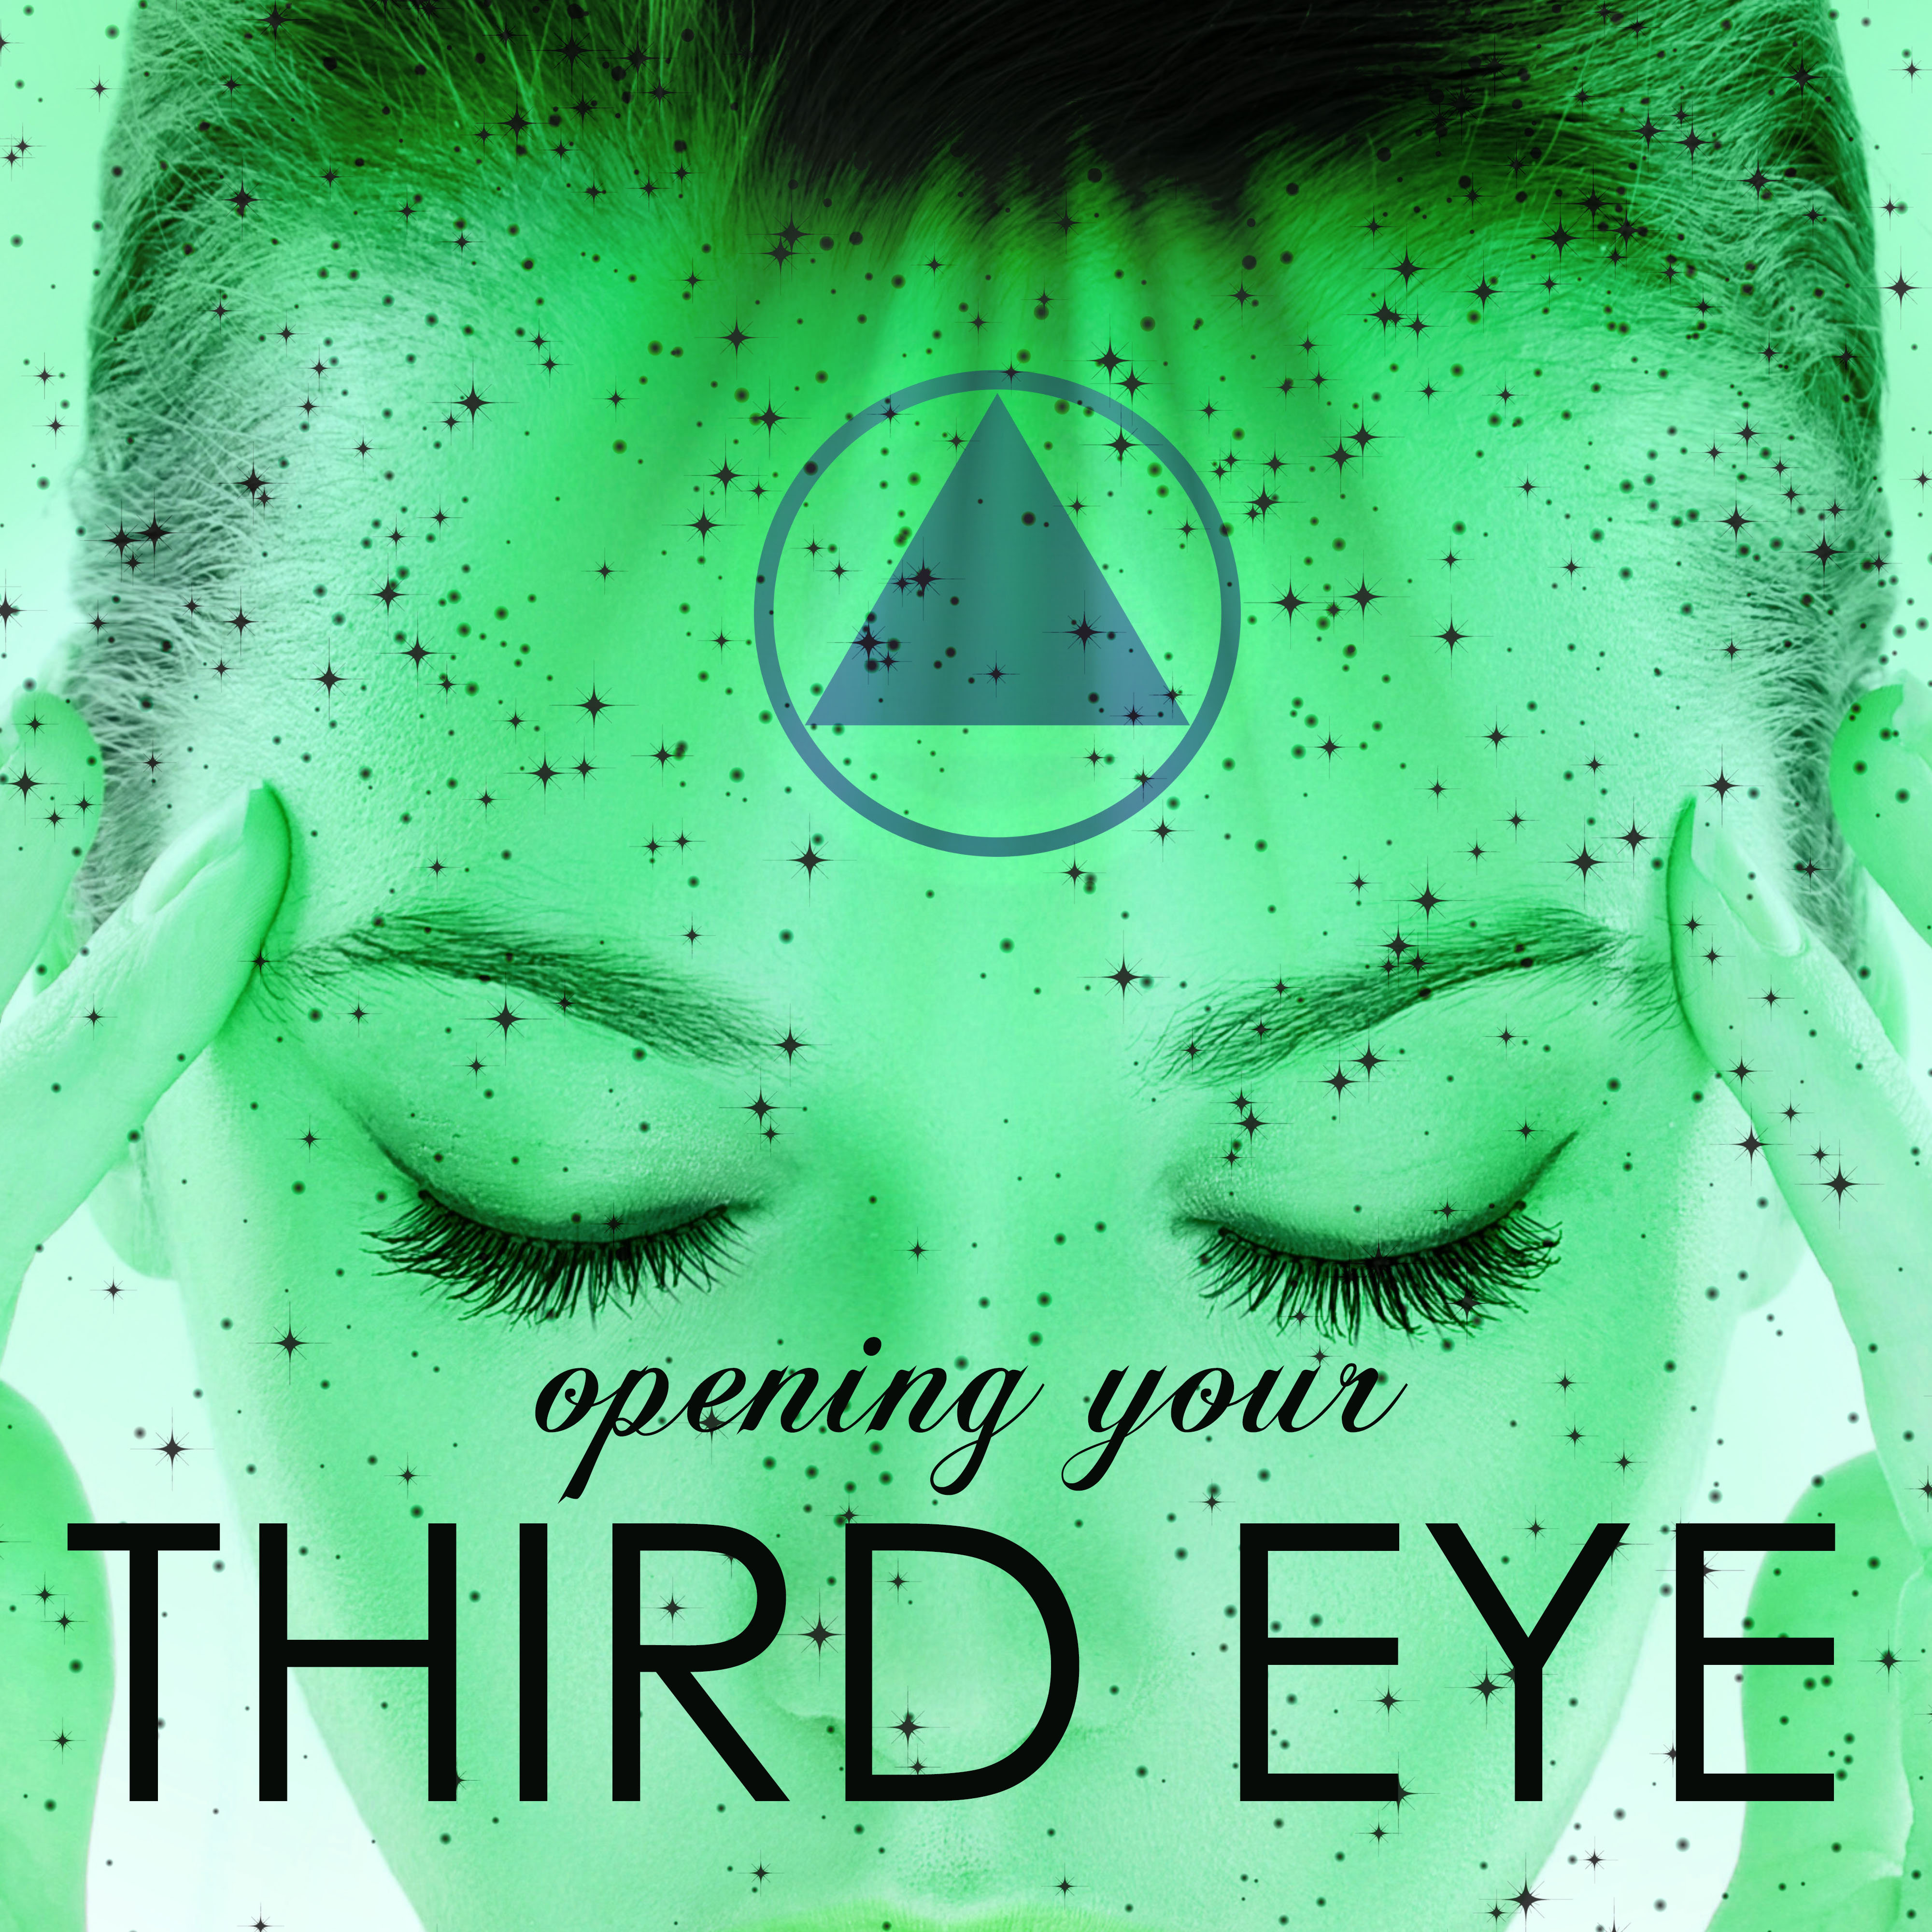 Open Your Third Eye